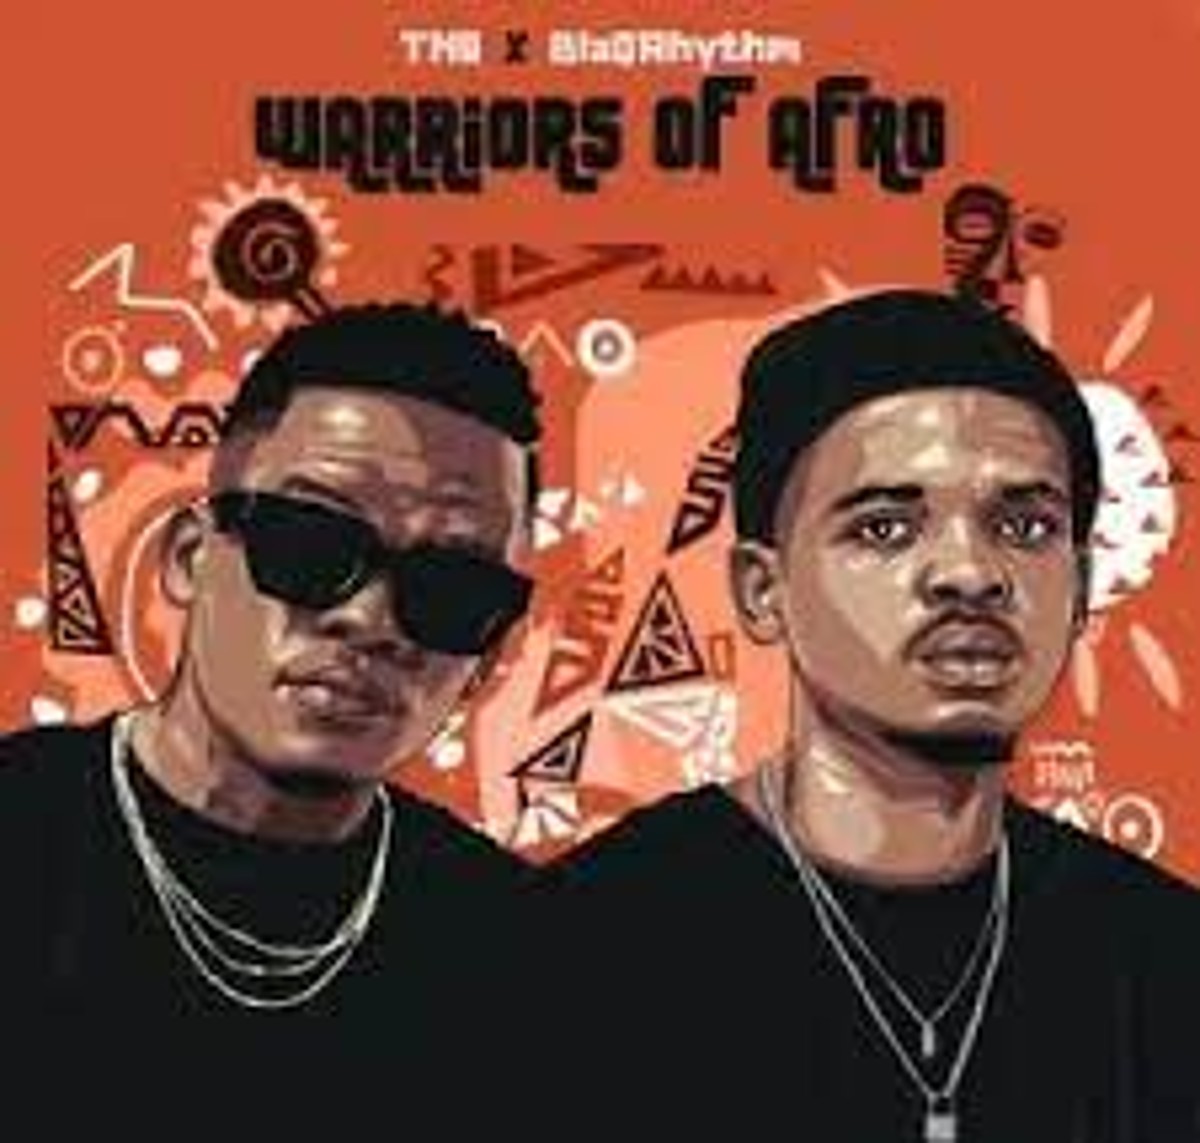 TNS & BlaQRhythm – Warriors of Afro Mp3 Download Fakaza: